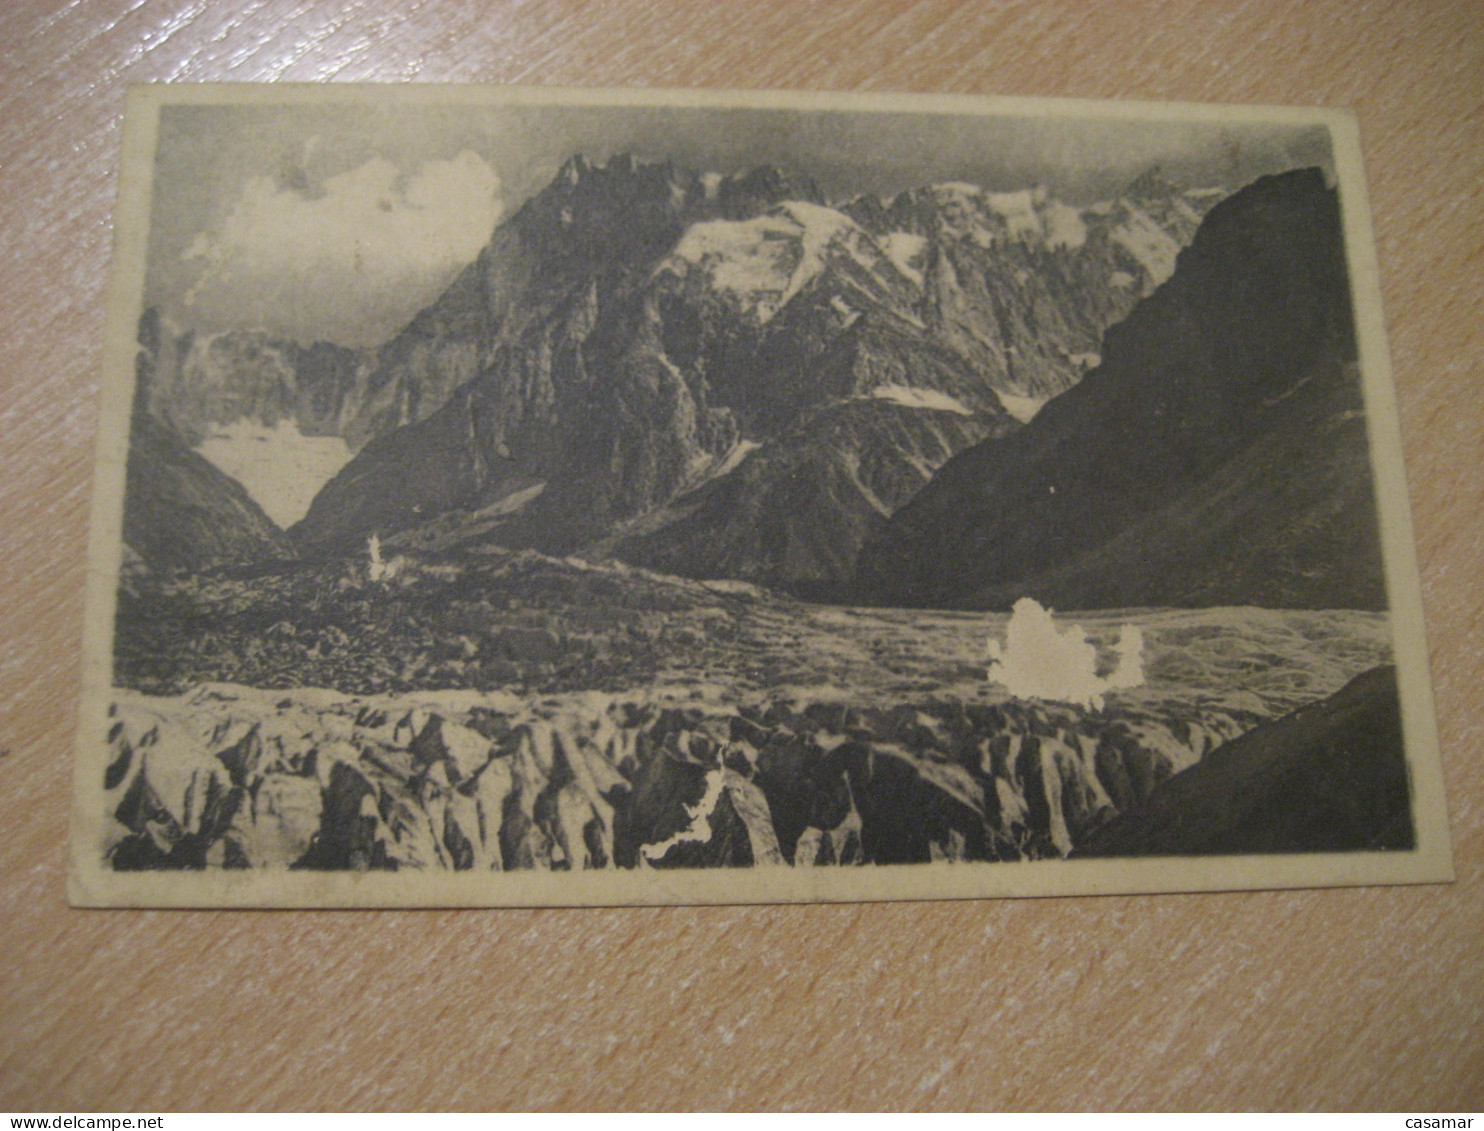 LYON BROTTEAUX 1931 To Charbonnieres-les-Bains Cigarettes Gitanes Tobacco Cancel Chamonix Mont-Blanc Postcard FRANCE - Tabaco